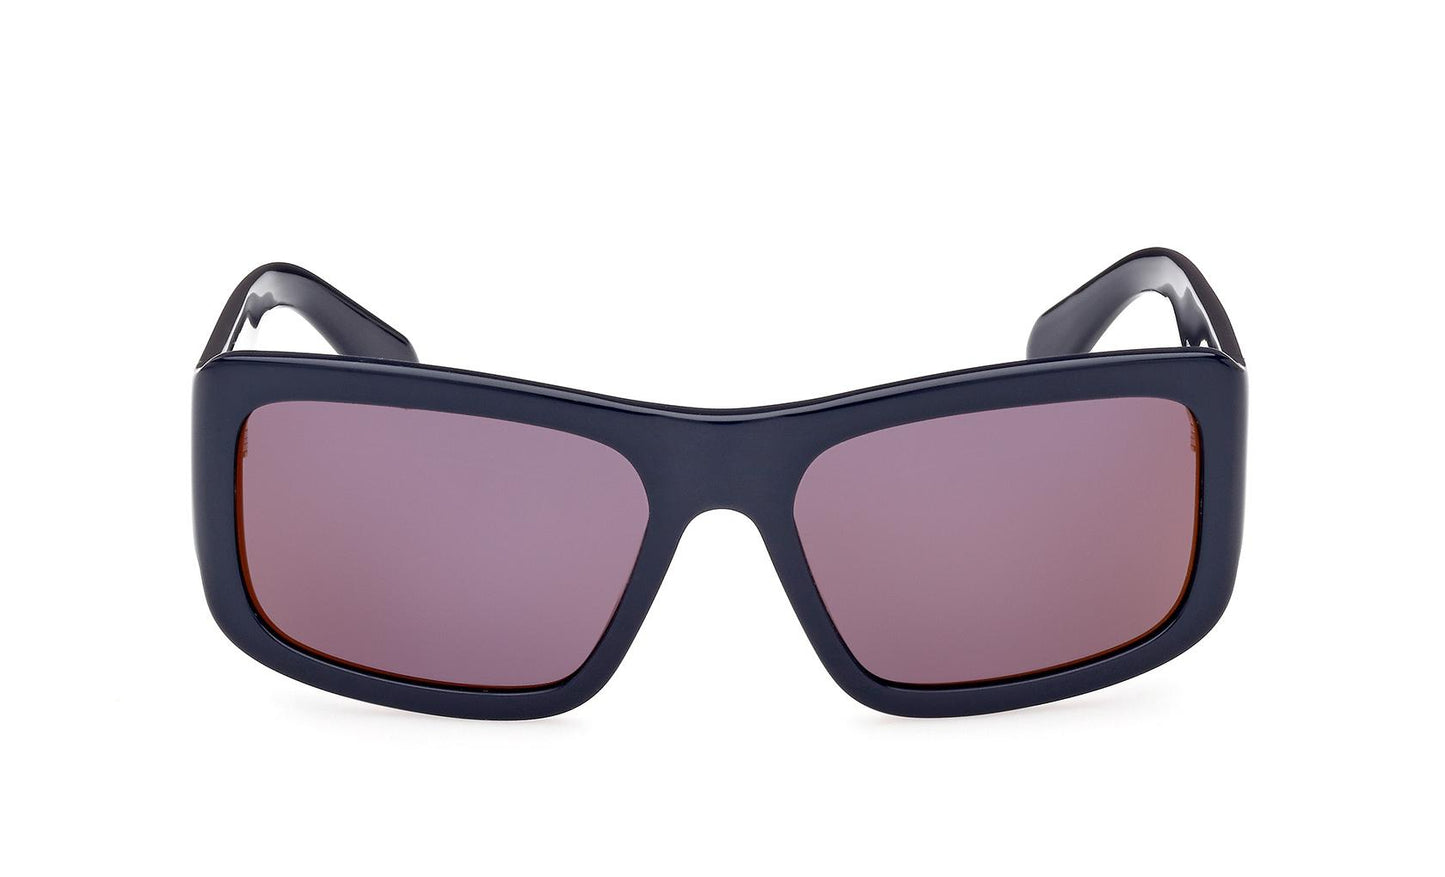 Adidas Originals Sunglasses OR0090 91X